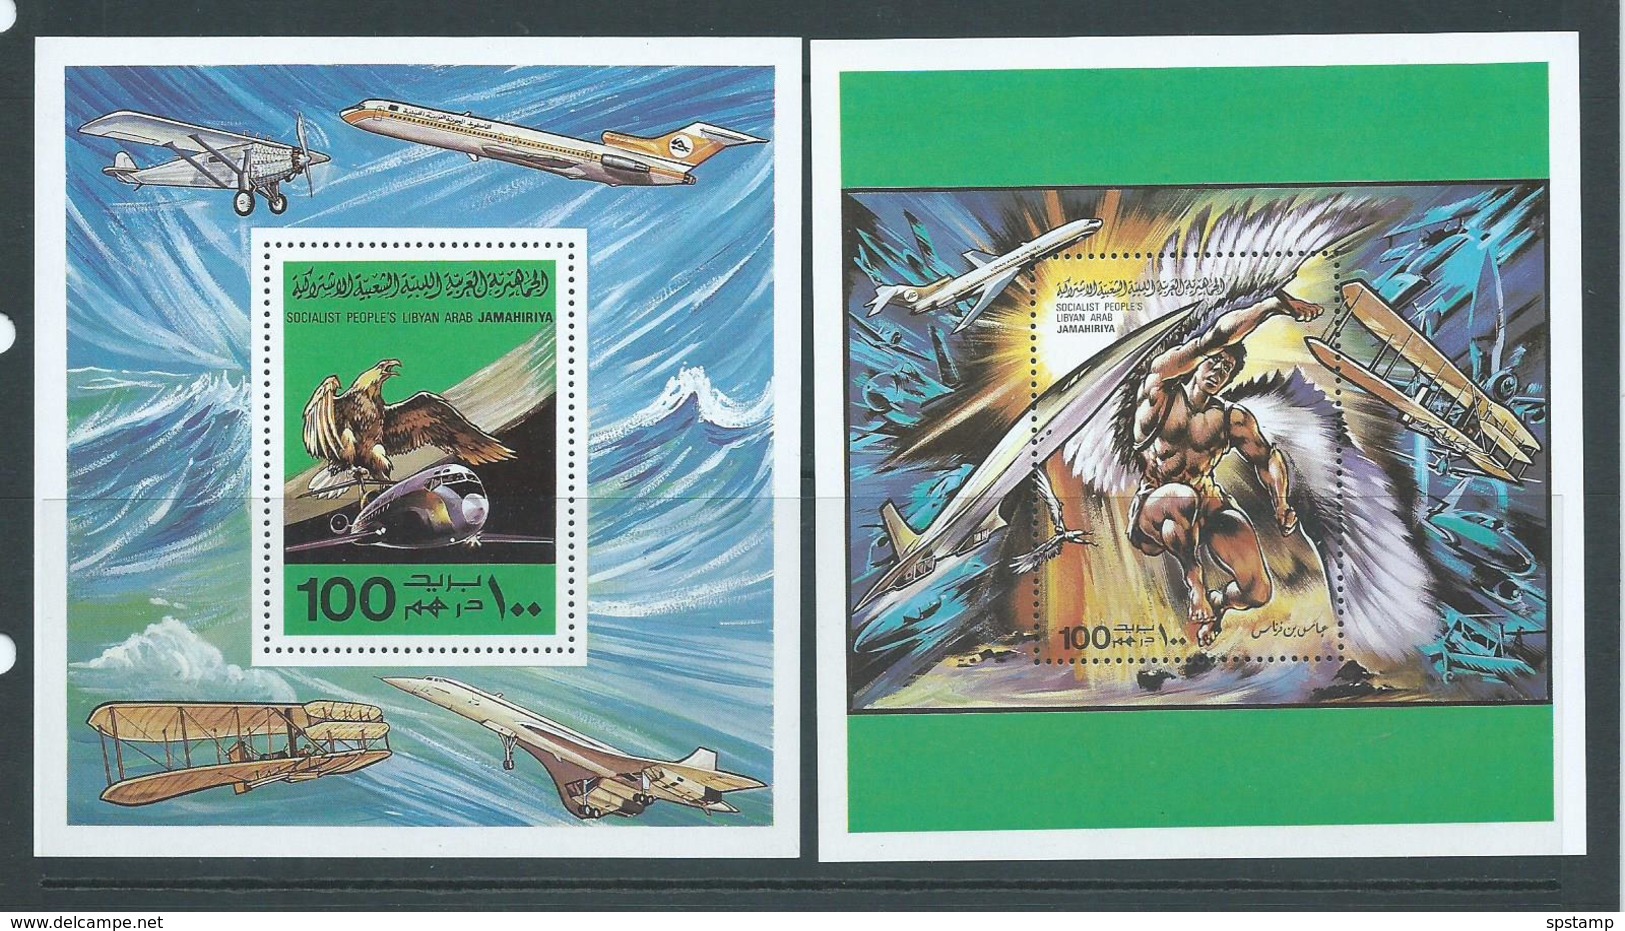 Libya 1978 Manned Flight Anniversary 100 Dm Miniature Sheets Set Of 2 MNH - Libya